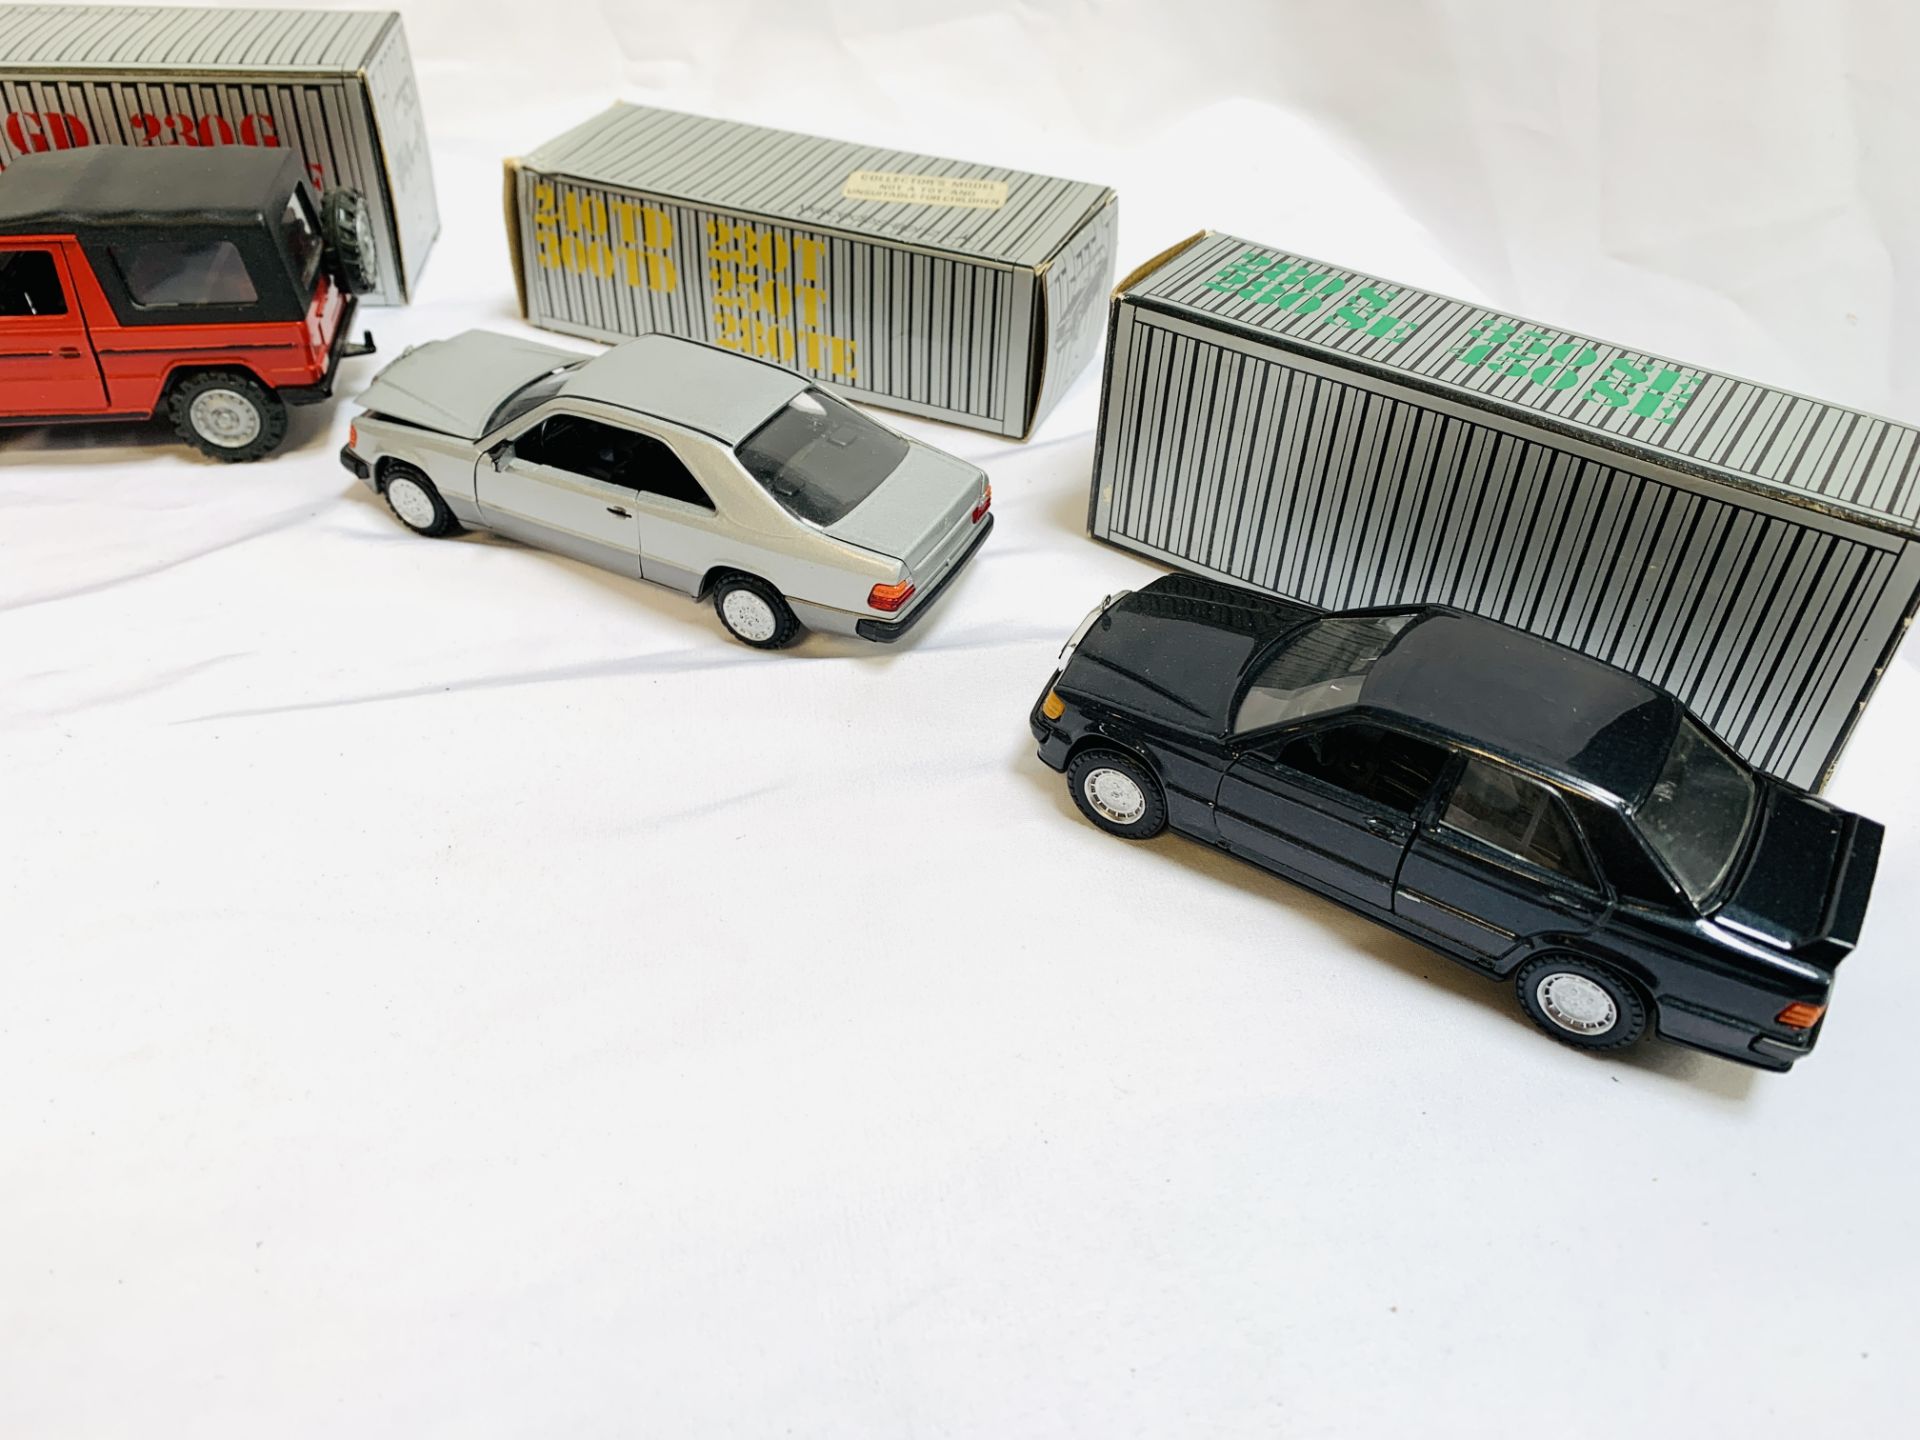 Seven Cursor-modell Mercedes Benz vehicles - Bild 4 aus 6